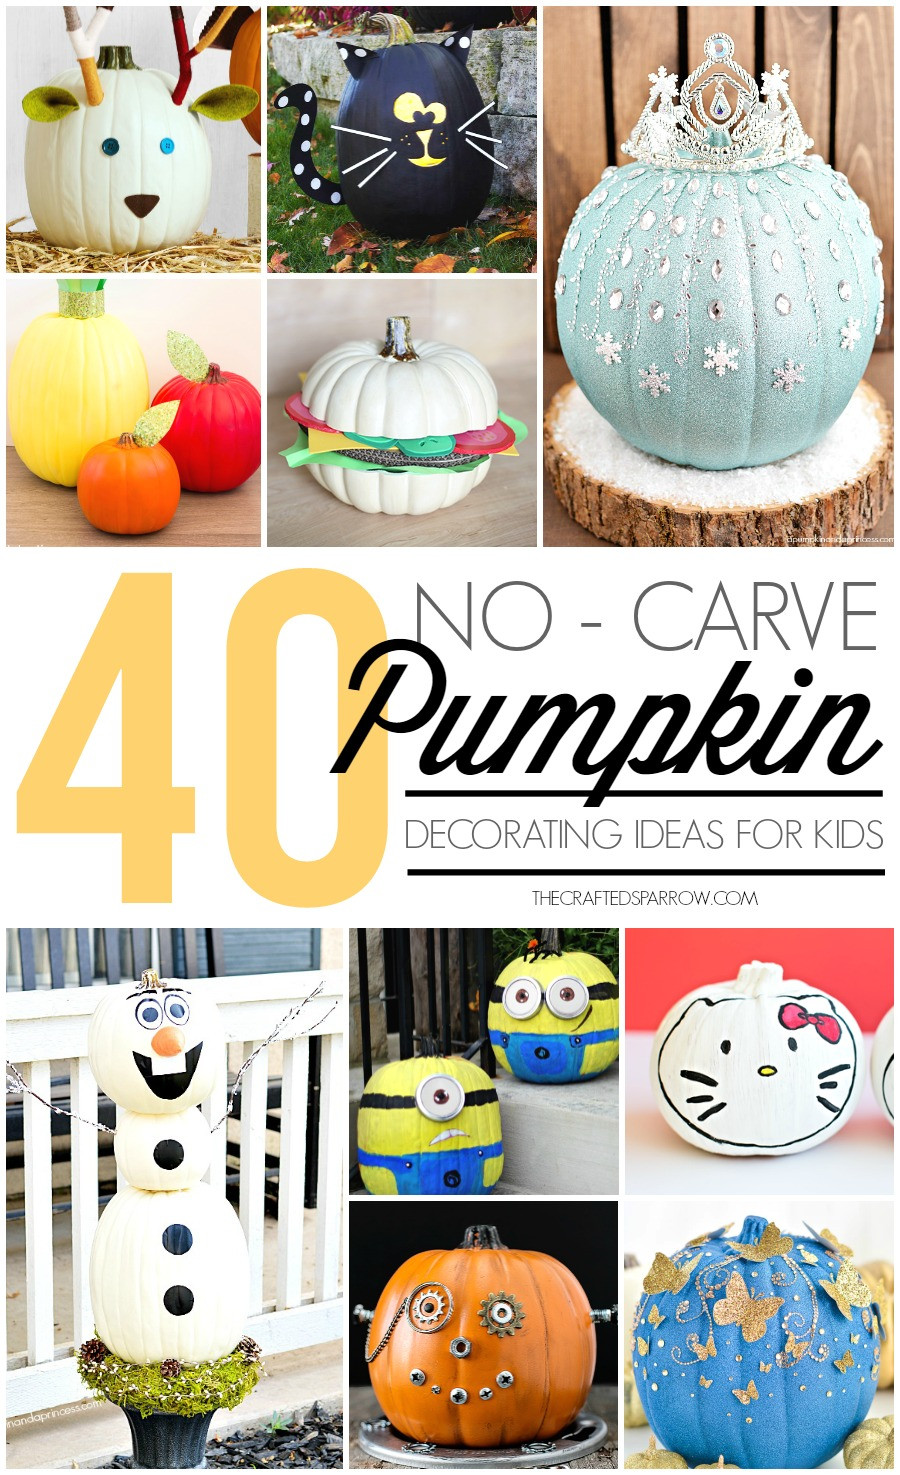 Pumpkin Decorating Ideas For Kids
 40 No Carve Pumpkin Decorating Ideas for Kids